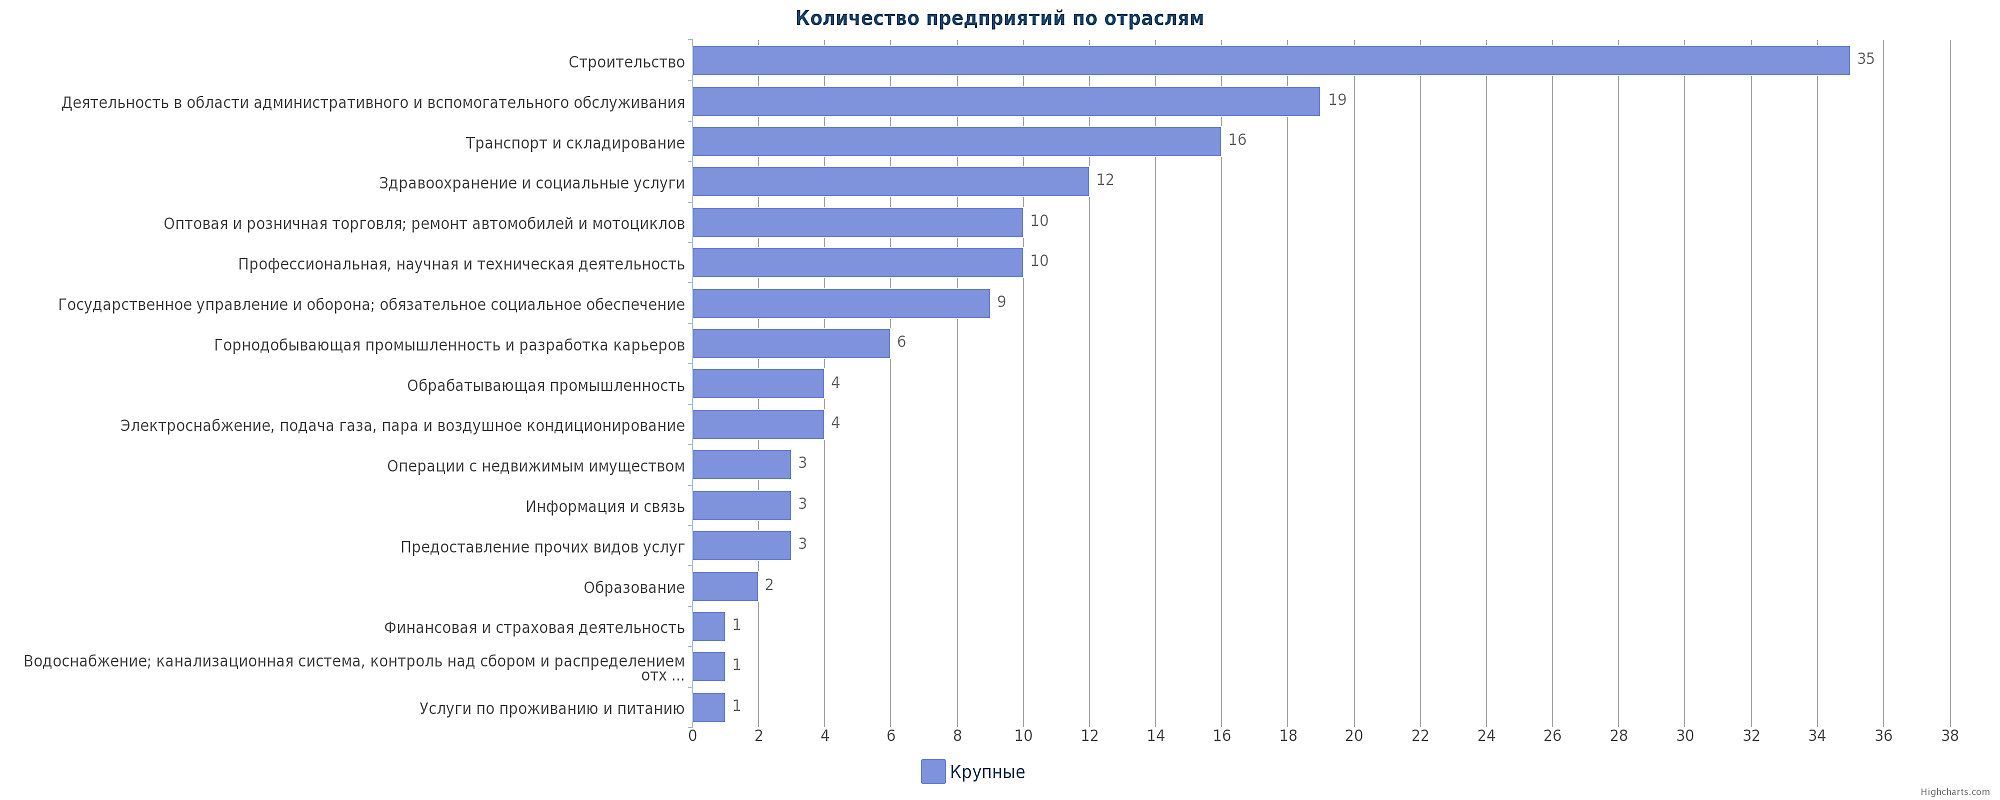 Крупные предприятия Казахстана по отраслям: Атырау, Кульсары, Геолог, Махамбет